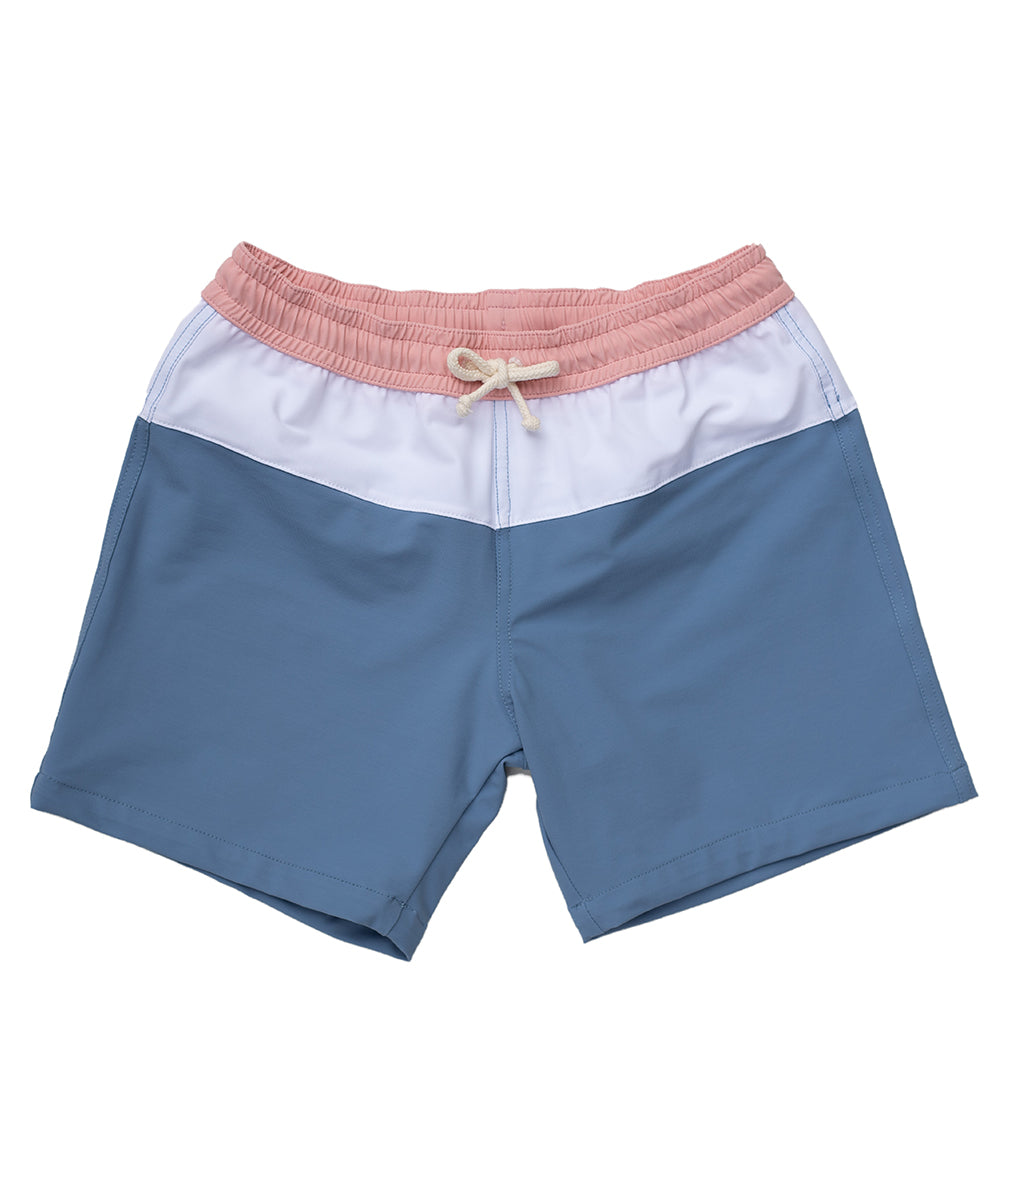 Men's Swim shorts Harry - Light Blue and Pink